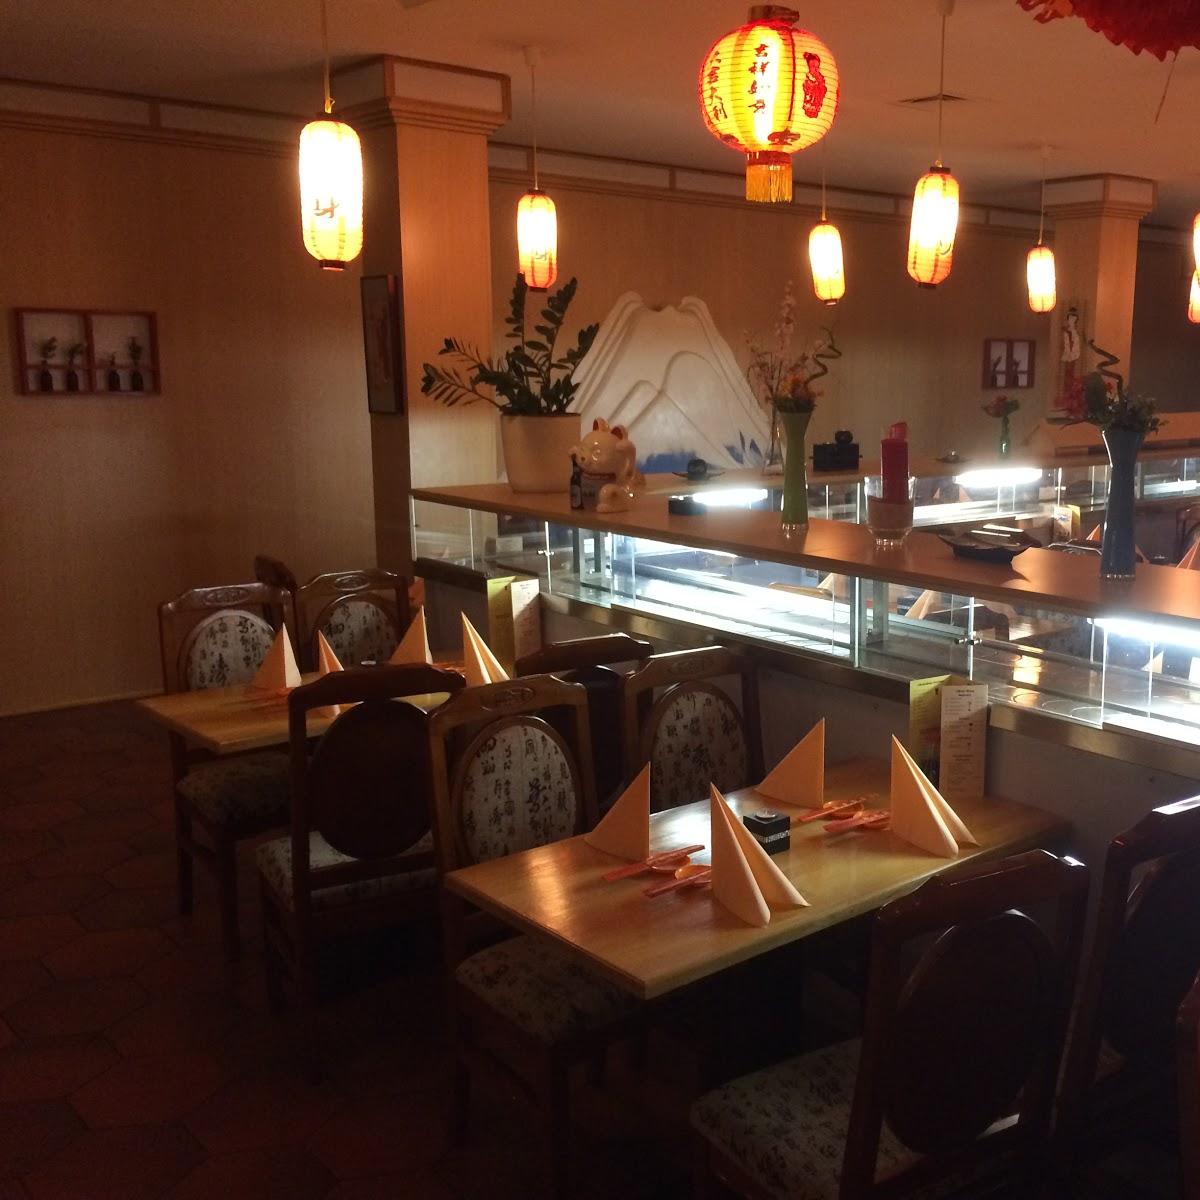 Restaurant "Fujiyama" in Herford